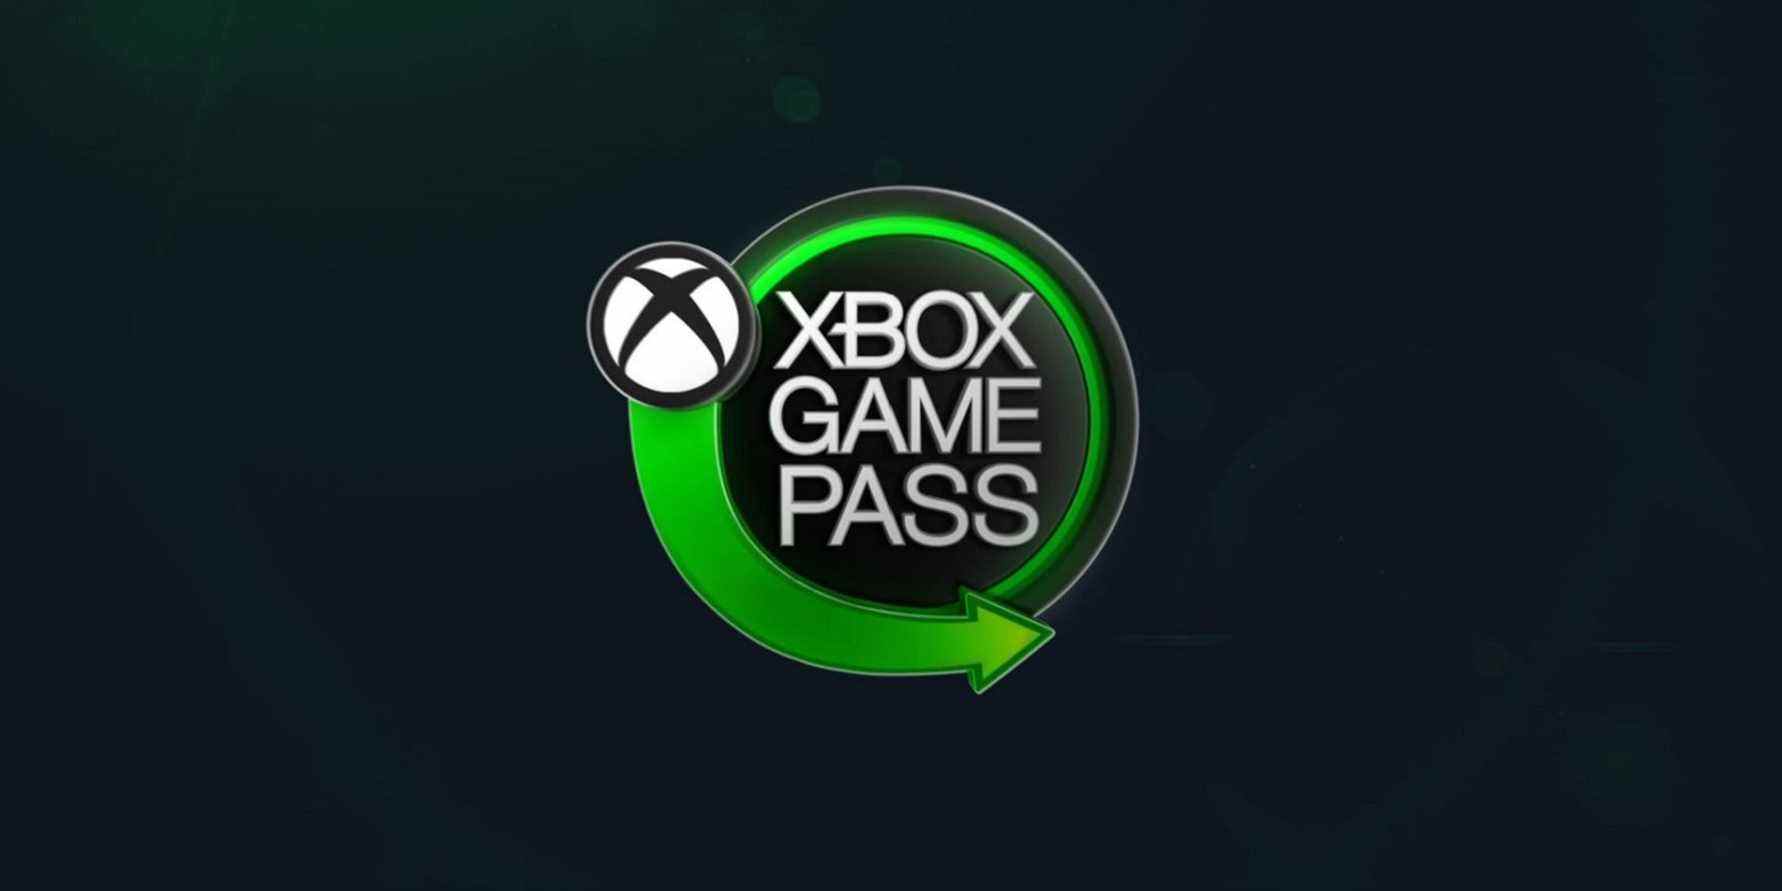 xbox-game-pass-logo-fond-noir-1